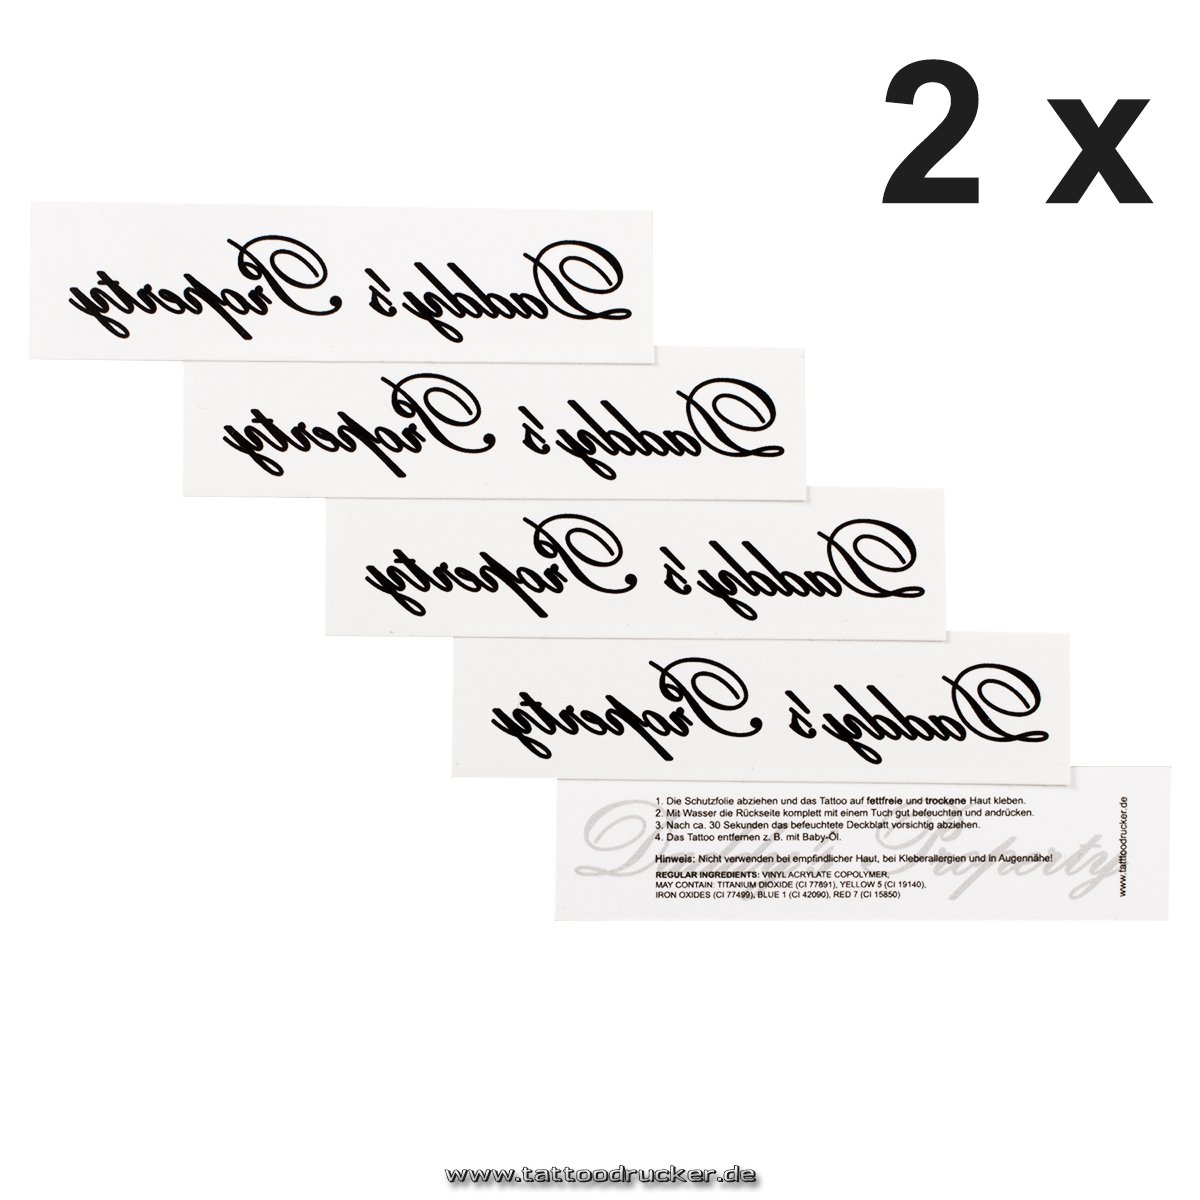 2 x Daddy's Property - Lettering Black Tattoo - Temporary Kinky Body Sticker (2)